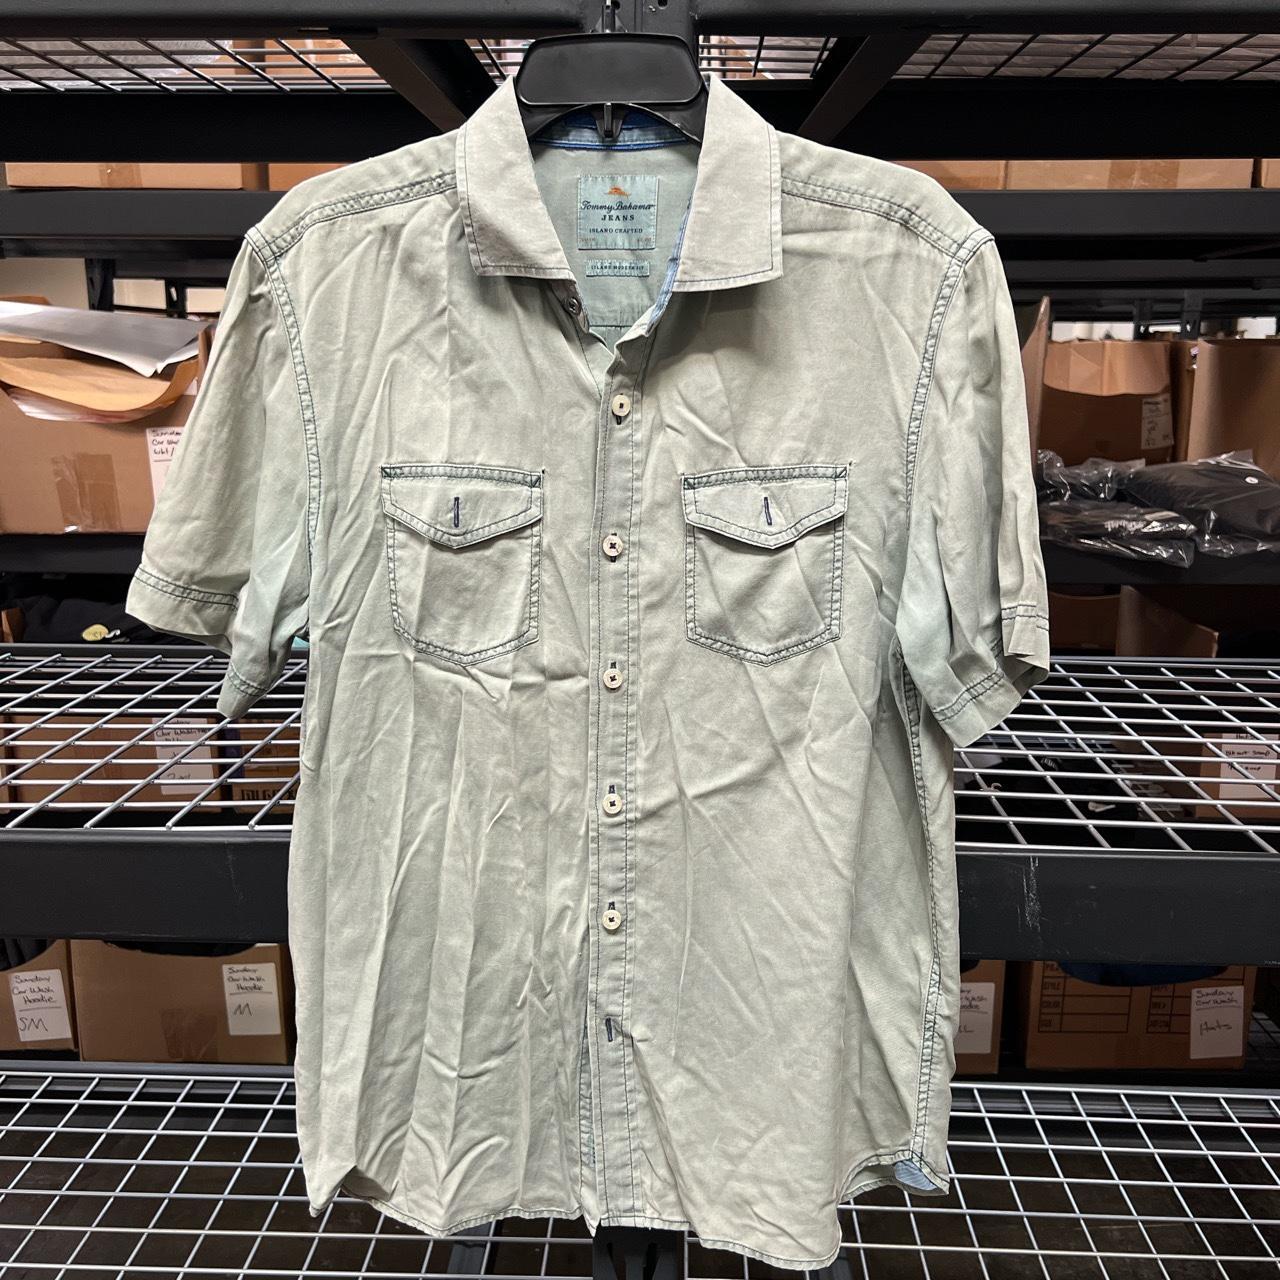 Tommy Bahama Shirt Mens XL Gray Long Sleeve - Depop